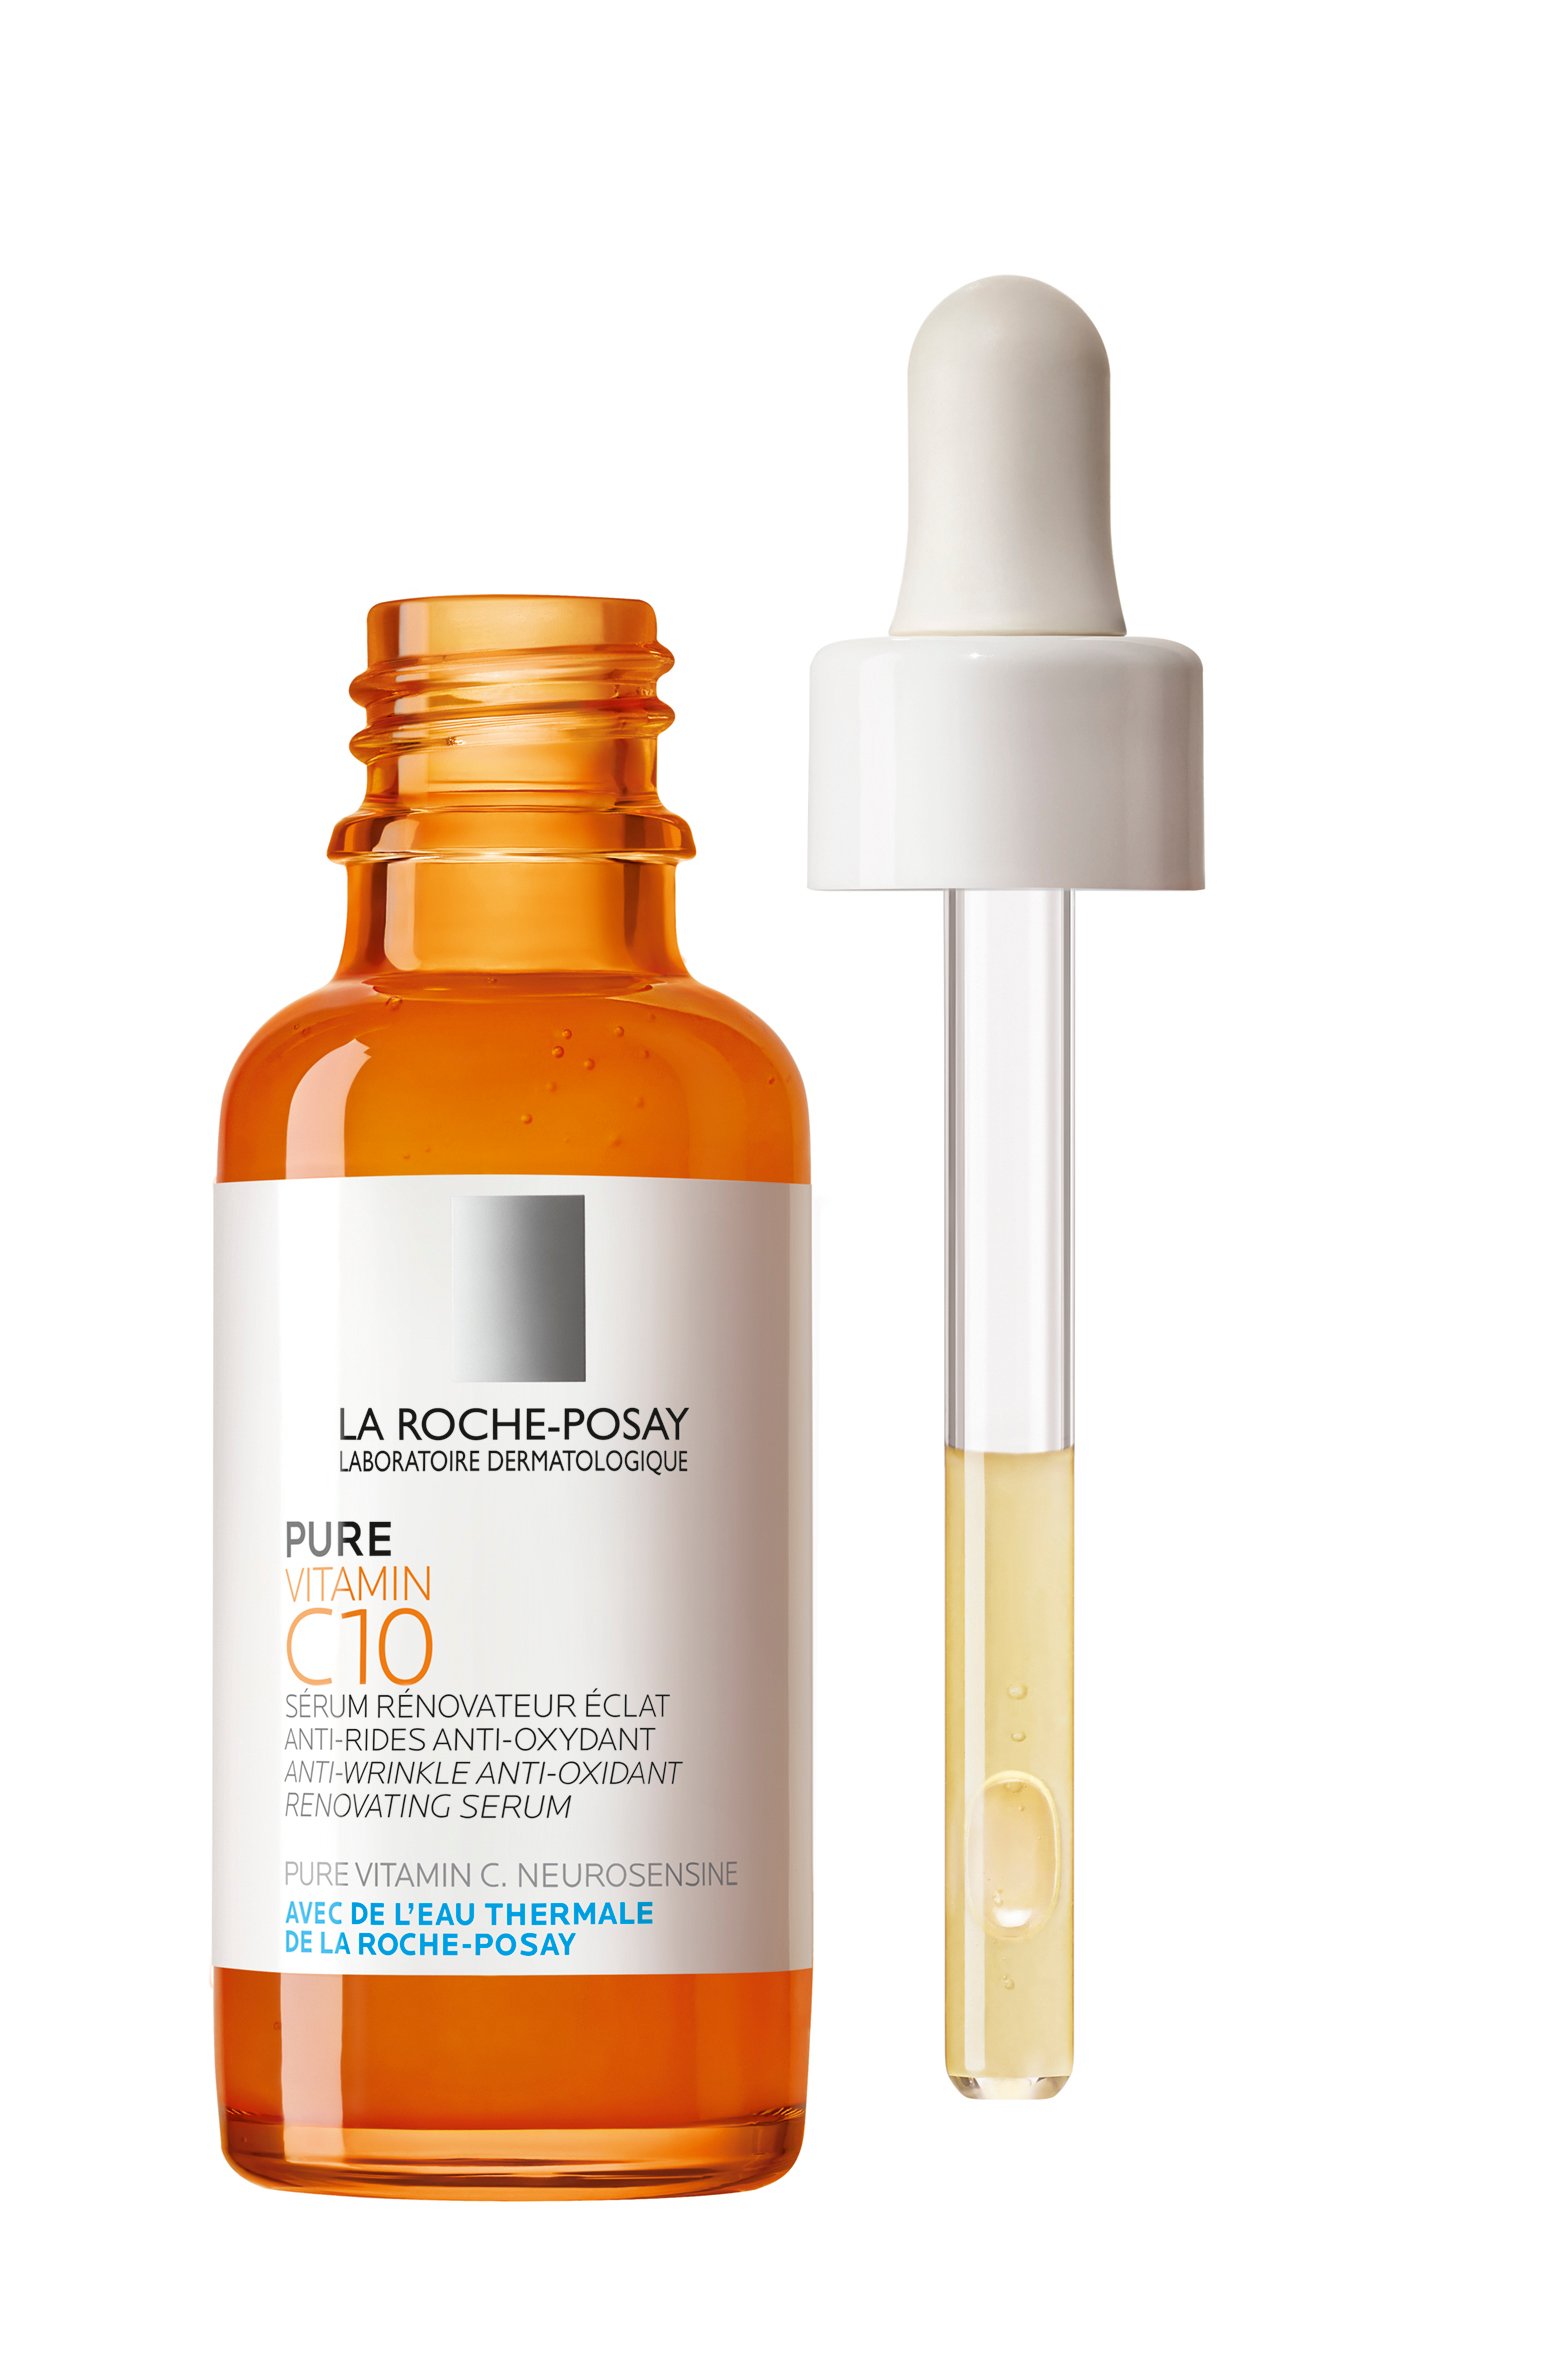 Сыворотка-антиоксидант с витамином С против морщин La Roche-Posay Pure Vitamin C10, для обновления кожи лица, 30 мл - фото 3